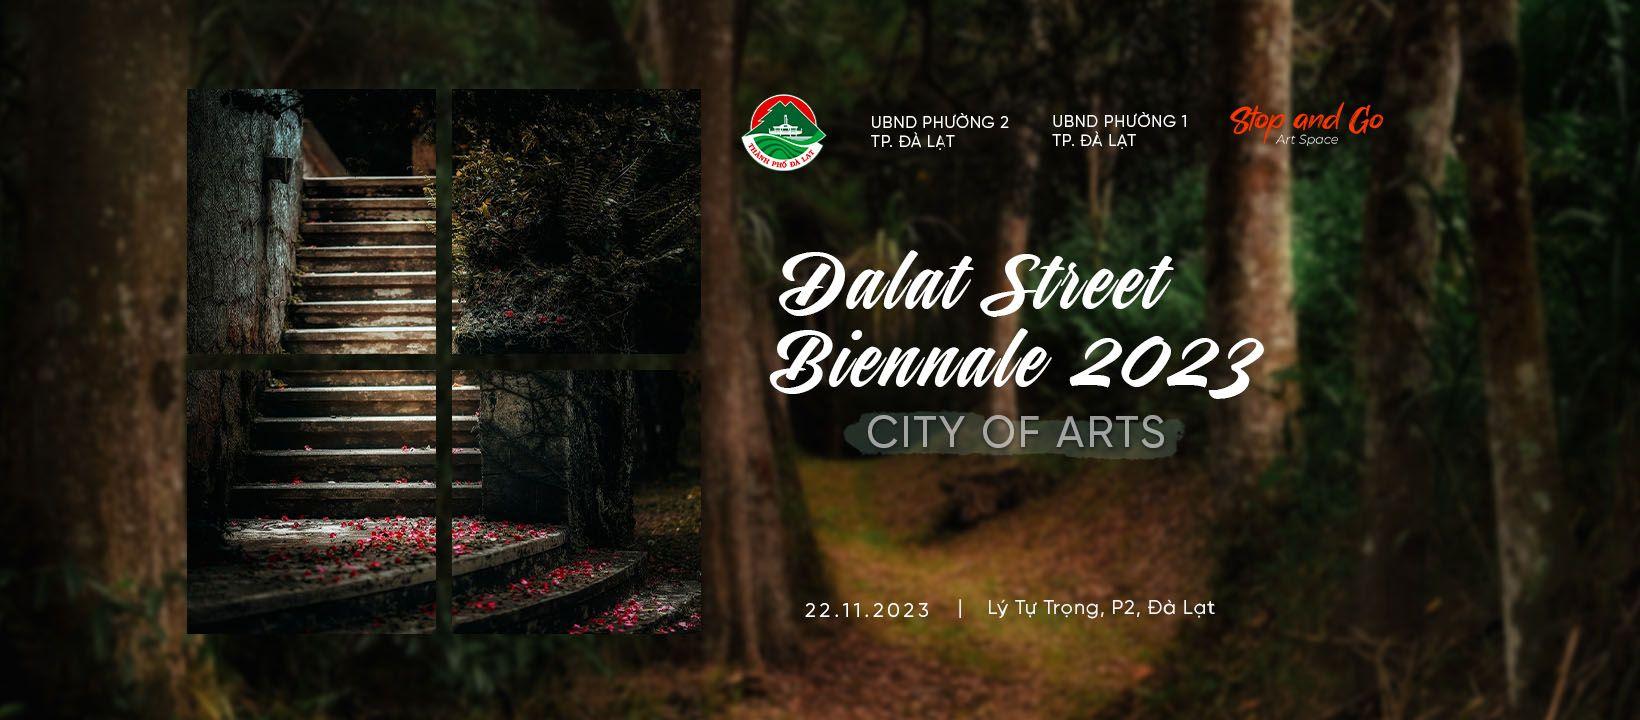 Exhibition: Dalat Street Biennale 2023 - City Of Arts